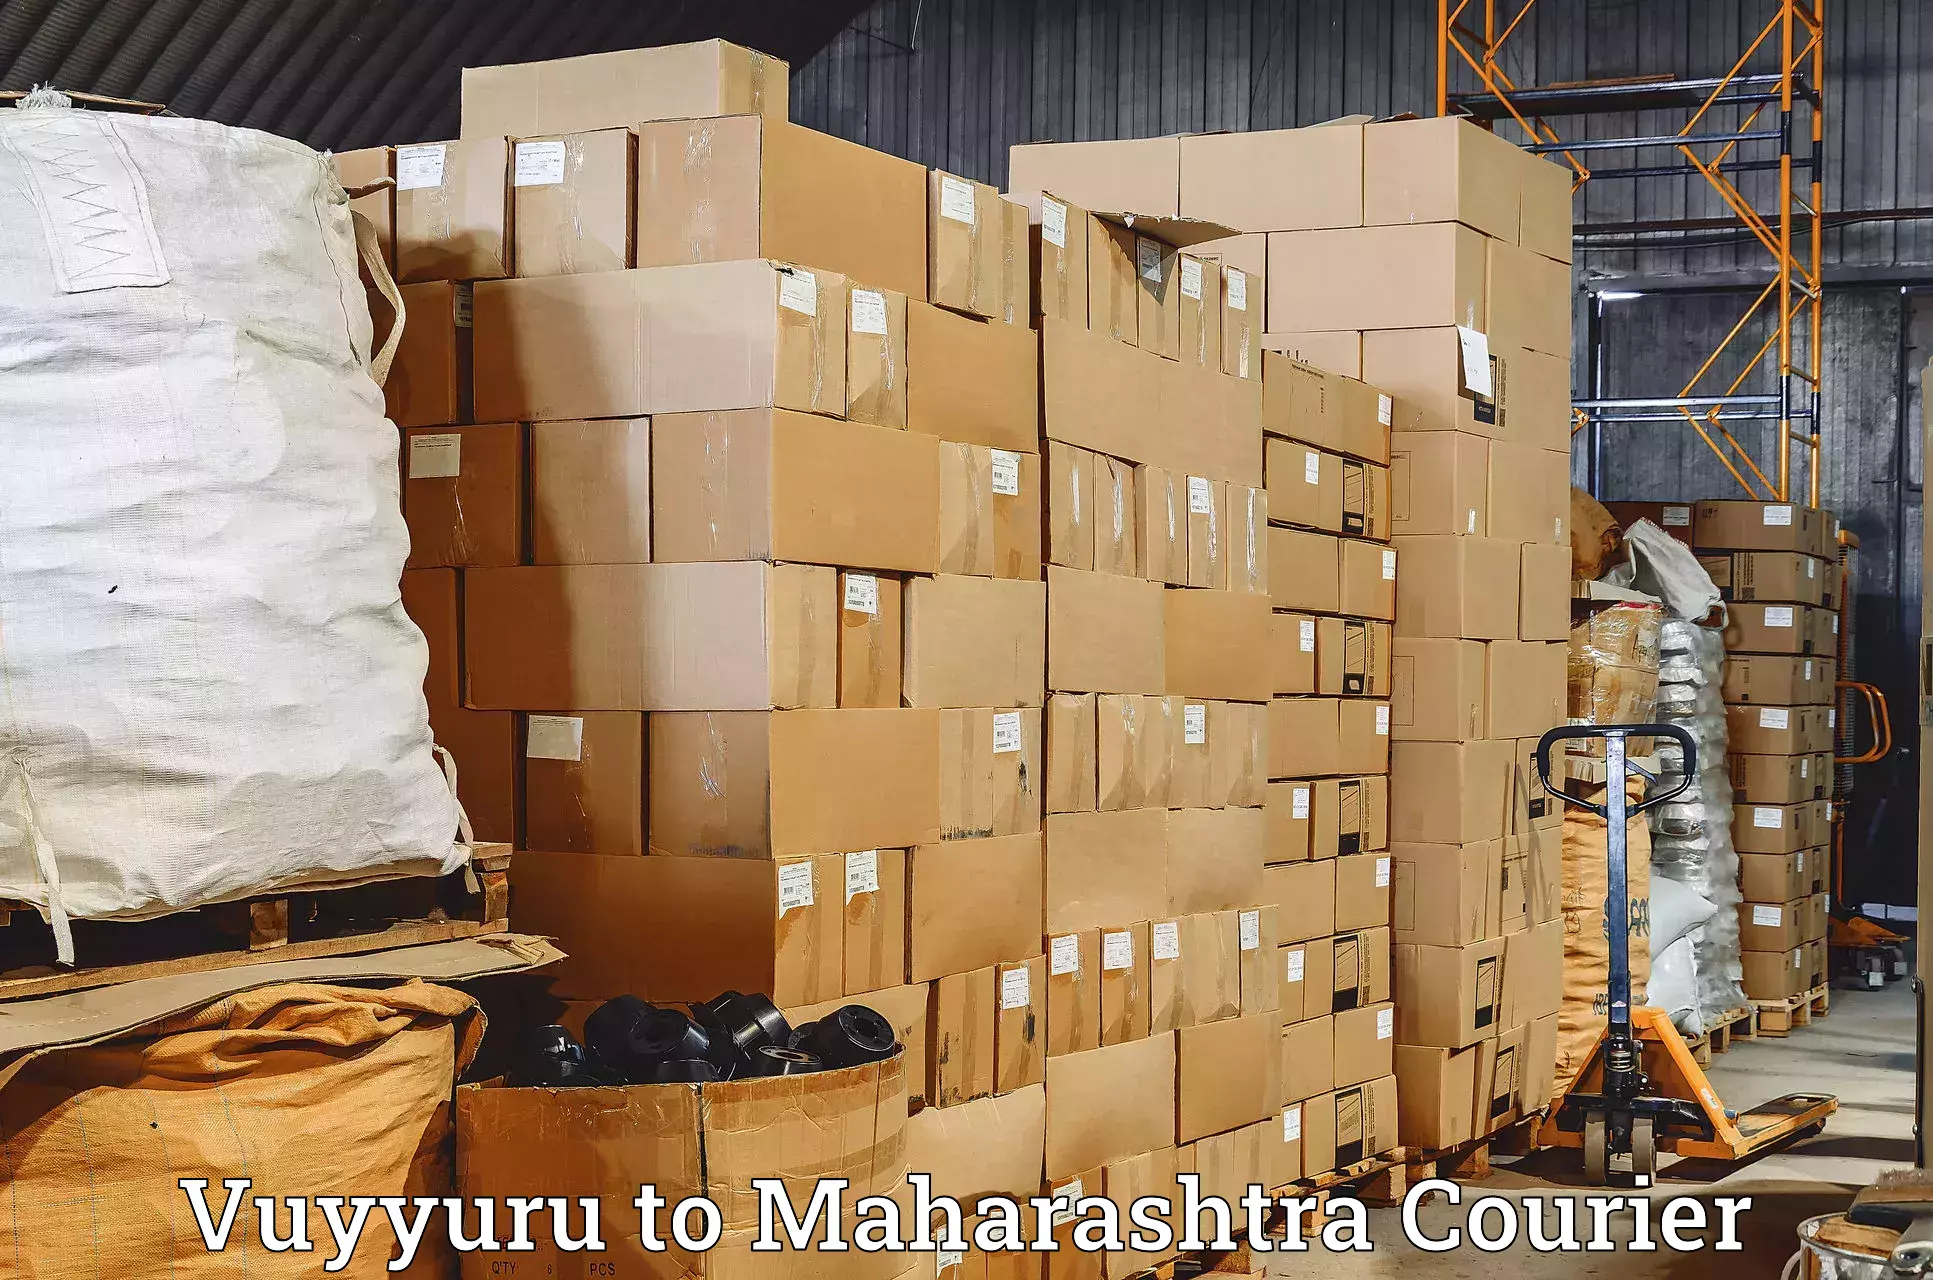 Courier service partnerships Vuyyuru to Nandurbar